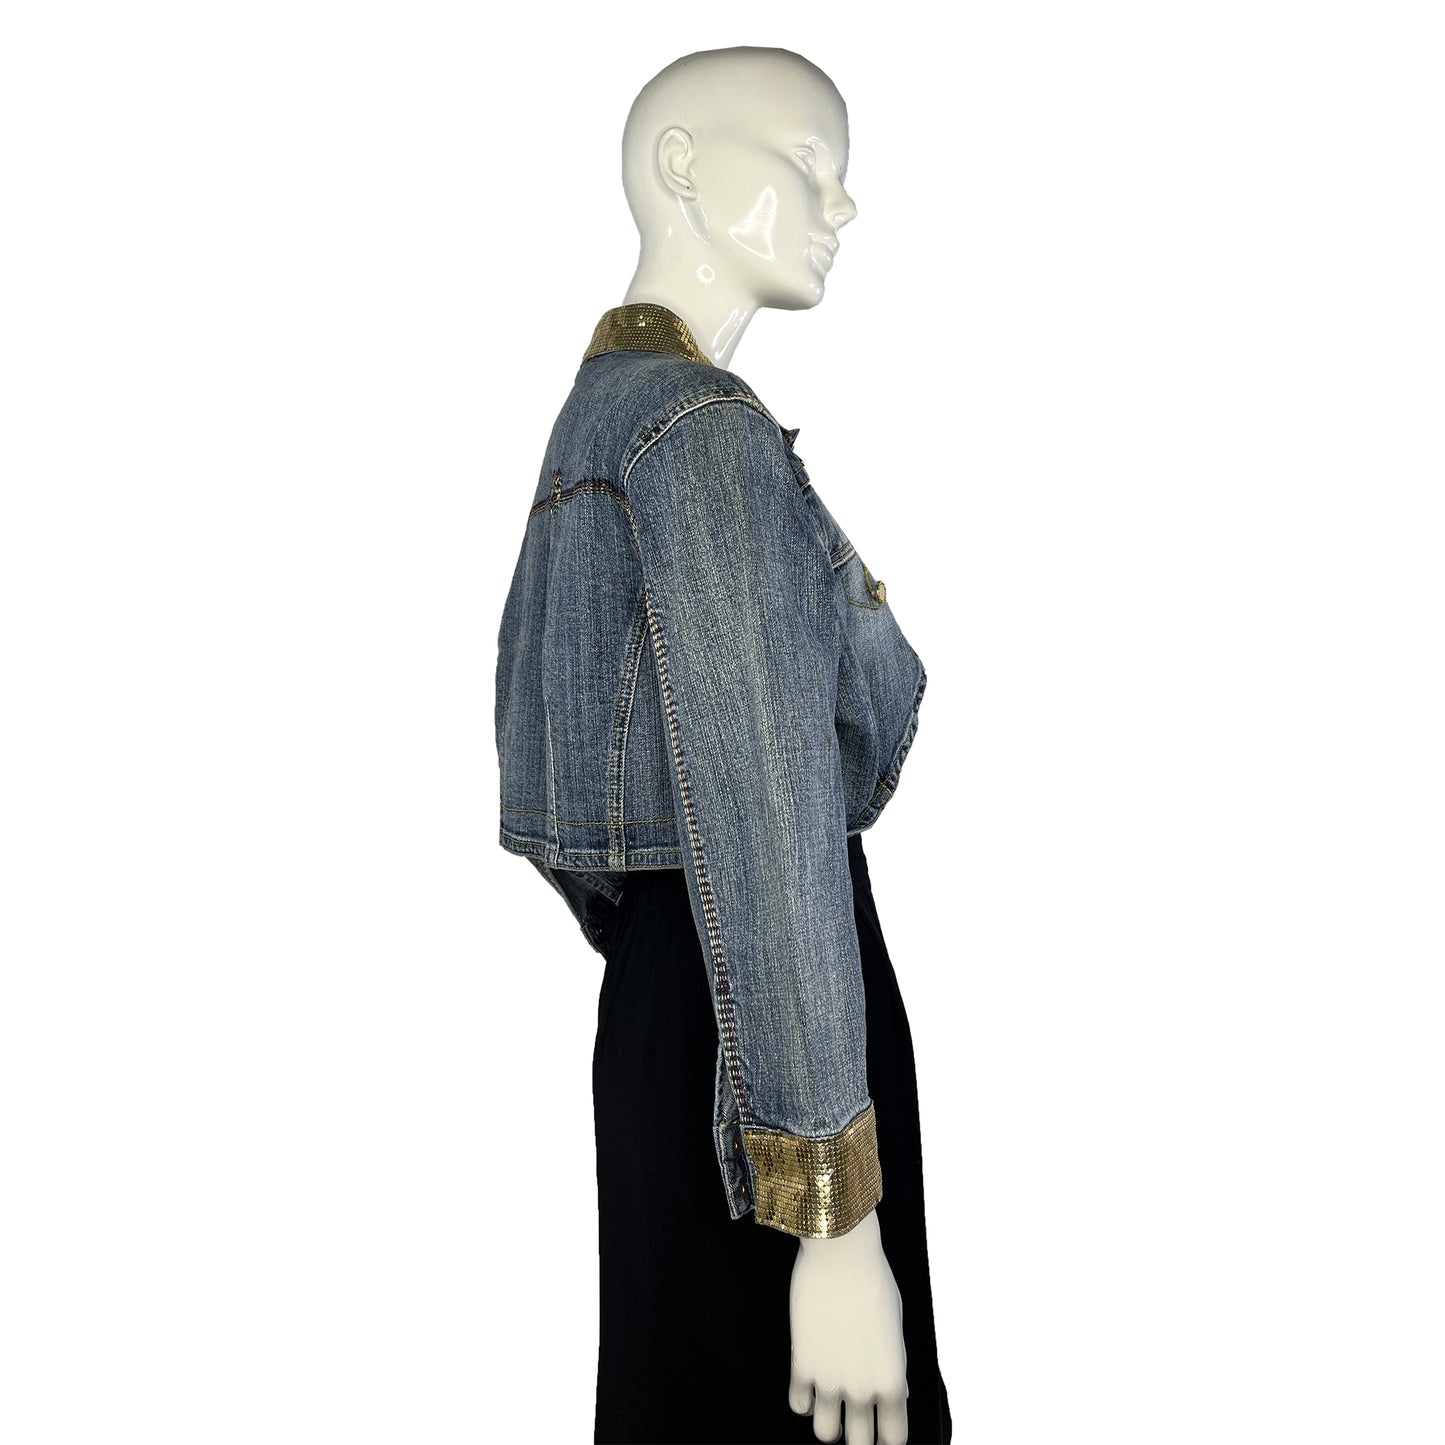 Pepe Jeans Denim Jacket Crop Metallic Gold Details & Buckle Blue Size XL SKU 000425-8